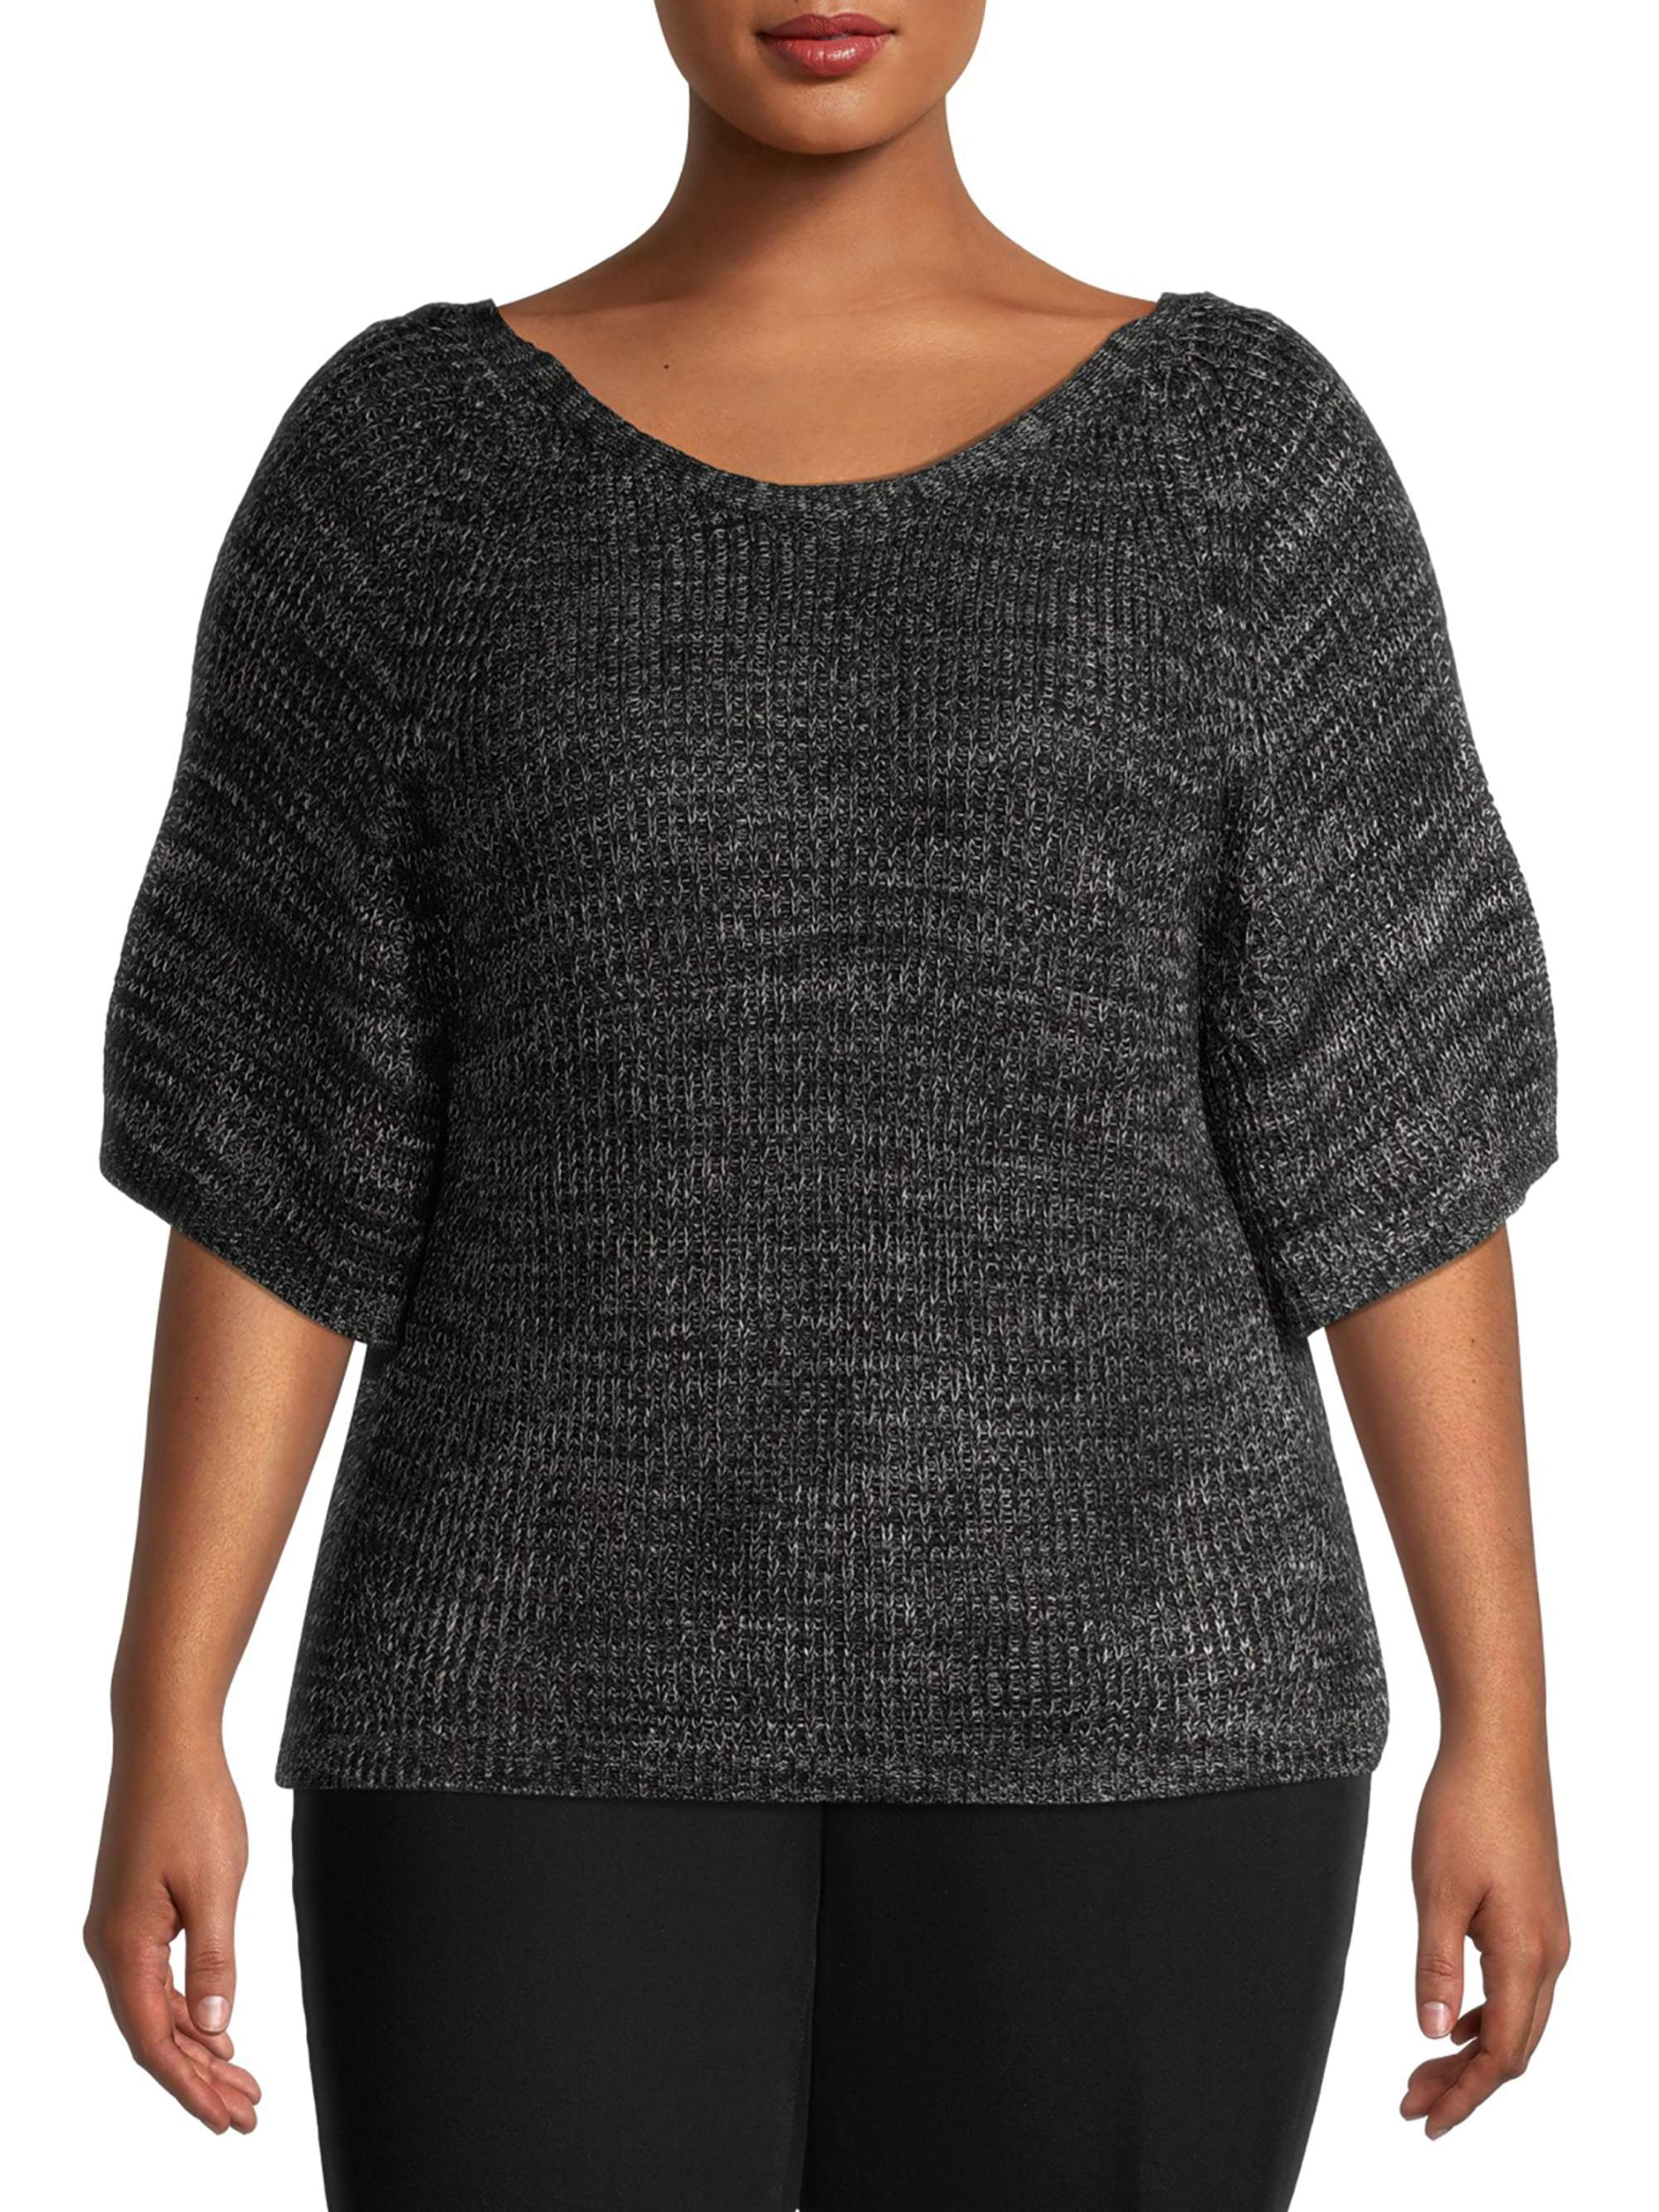 Terra & Sky Plus Size Spacedye Quarter Sleeve Sweater - Walmart.com